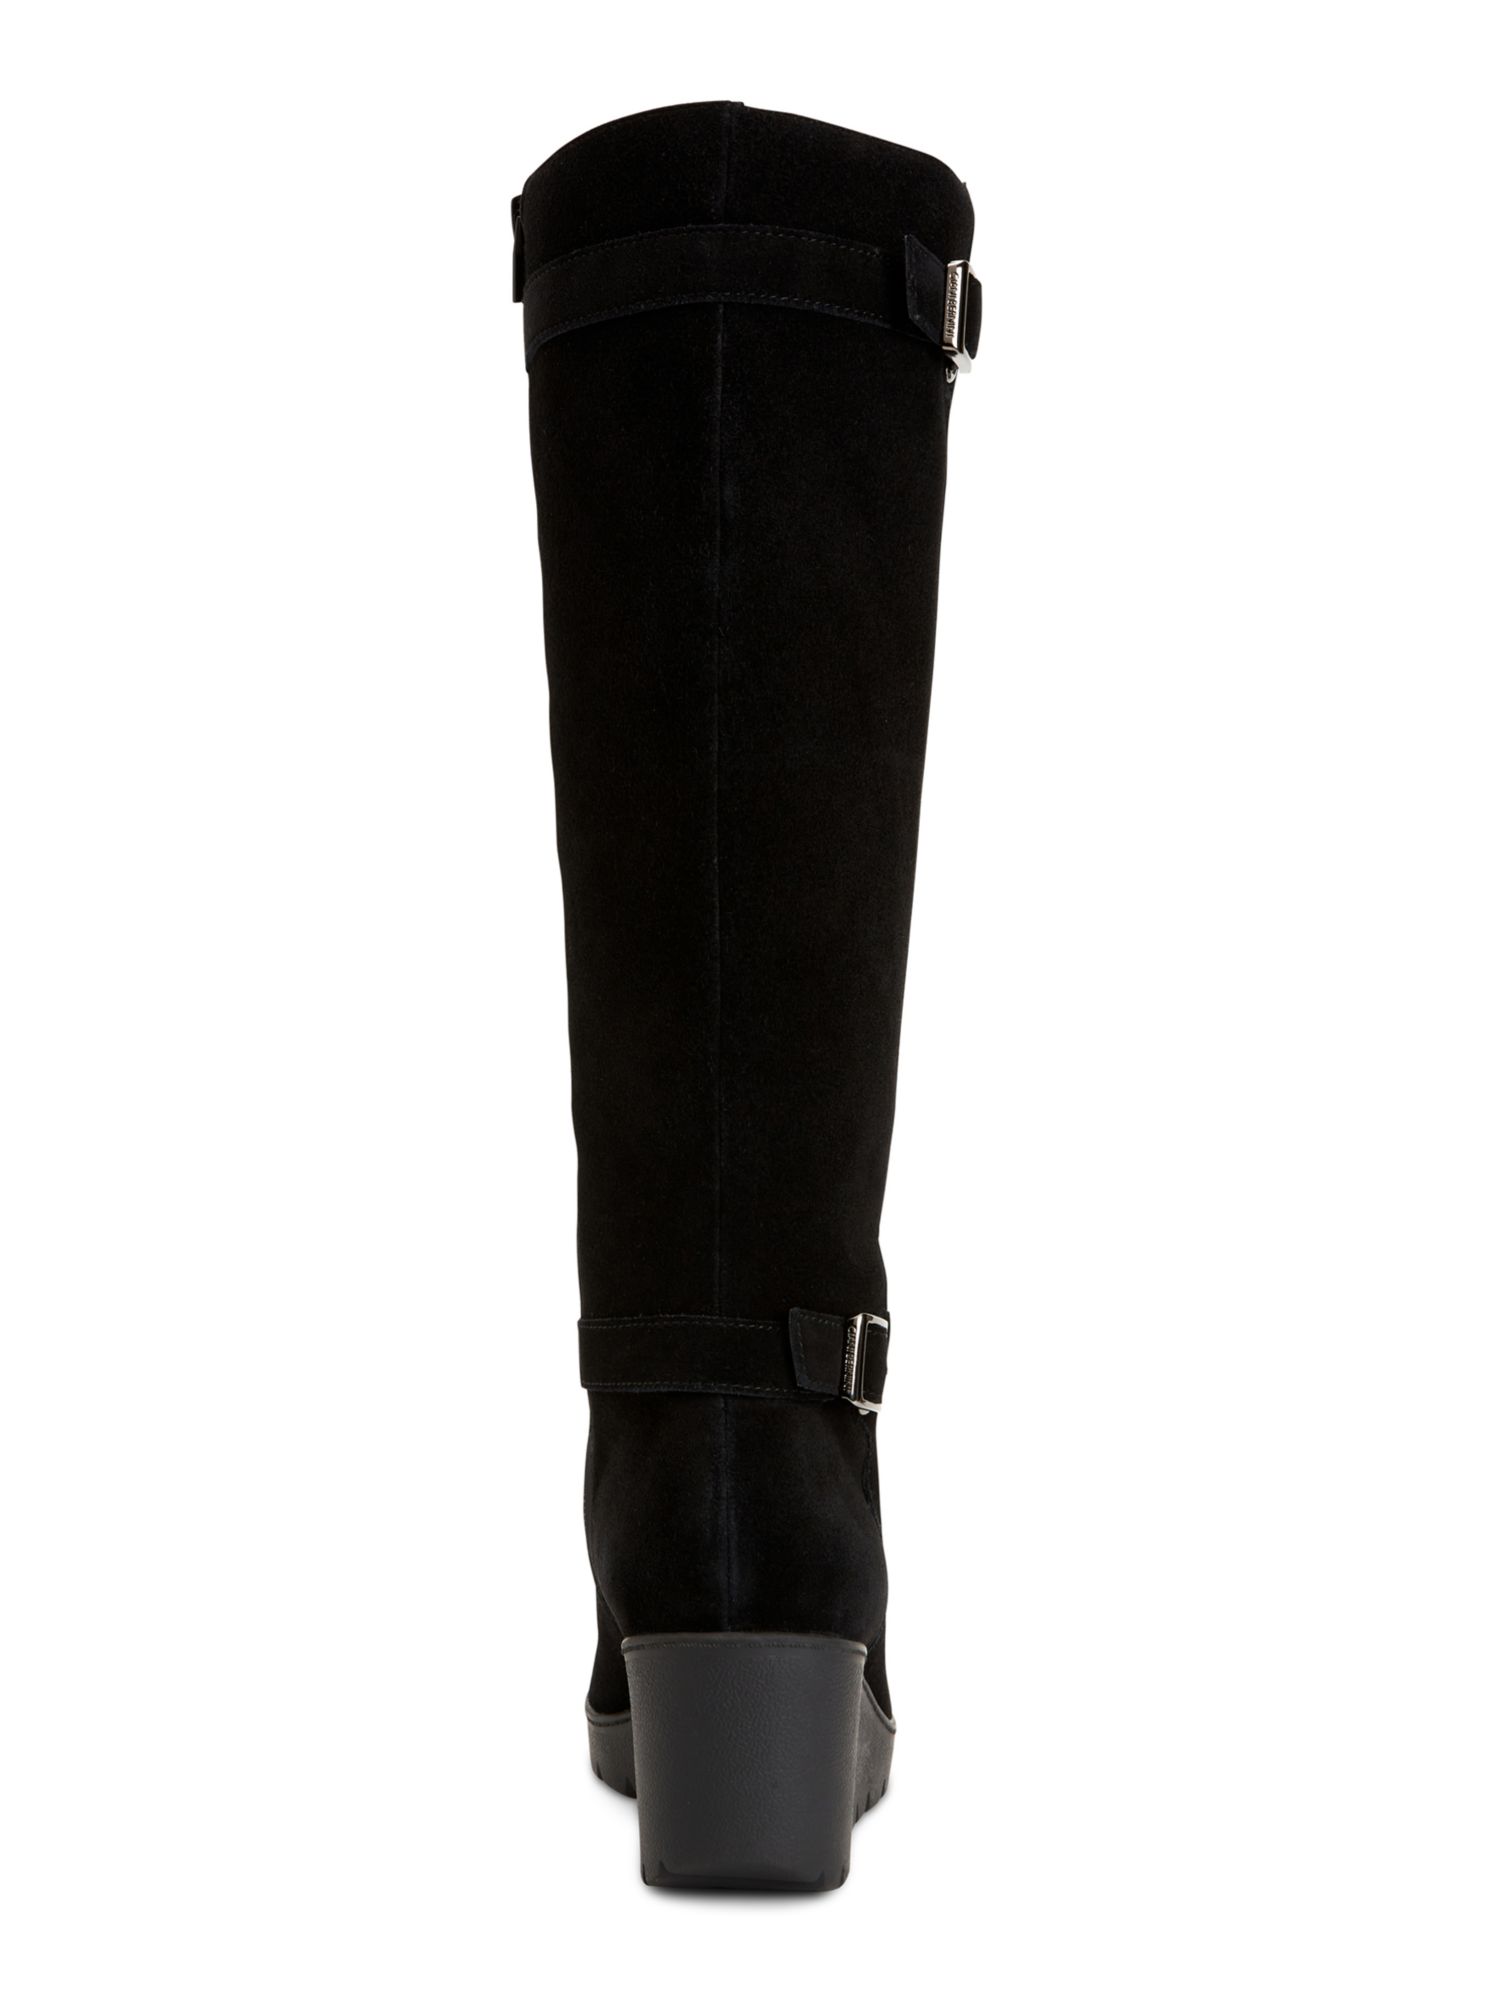 GIANI BERNINI Womens Black 1/2" Platform Waterproof Buckle Accent Sannaa Round Toe Wedge Zip-Up Leather Boots Shoes 9.5 M